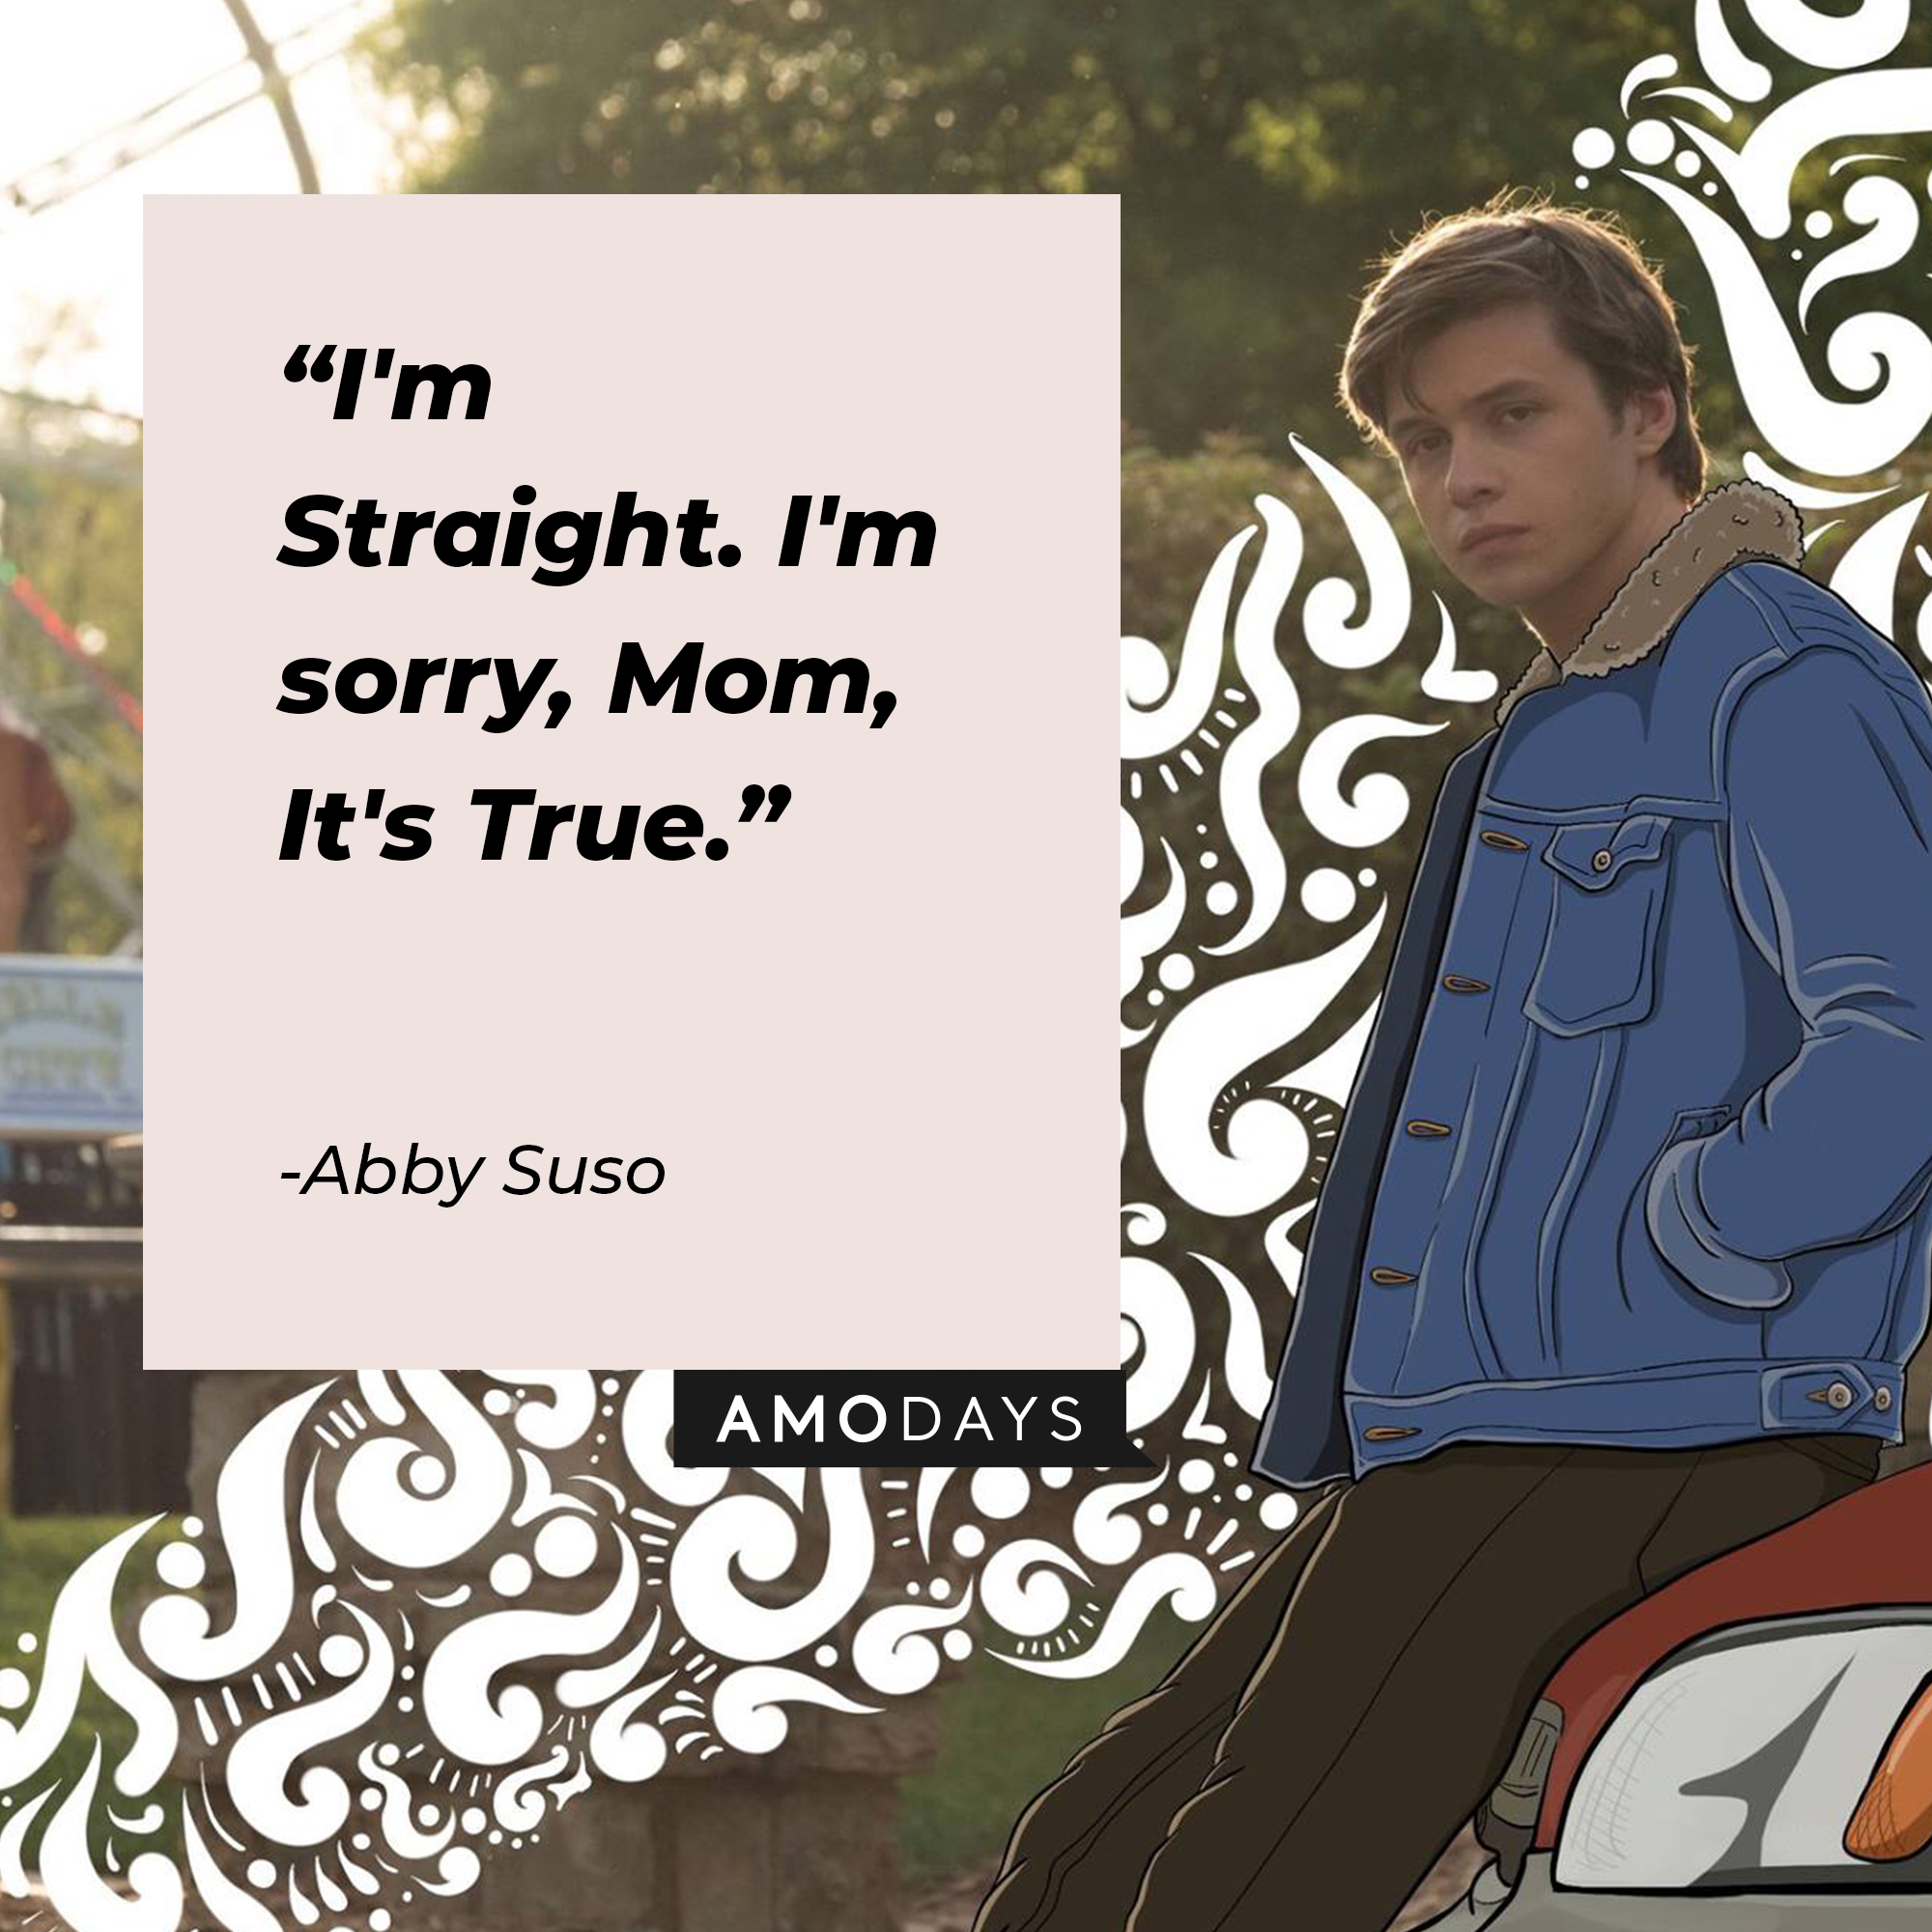 Abby Suso's quote, "I'm Straight. I'm sorry, Mom, It's True." | Image: facebook.com/LoveSimonMovie